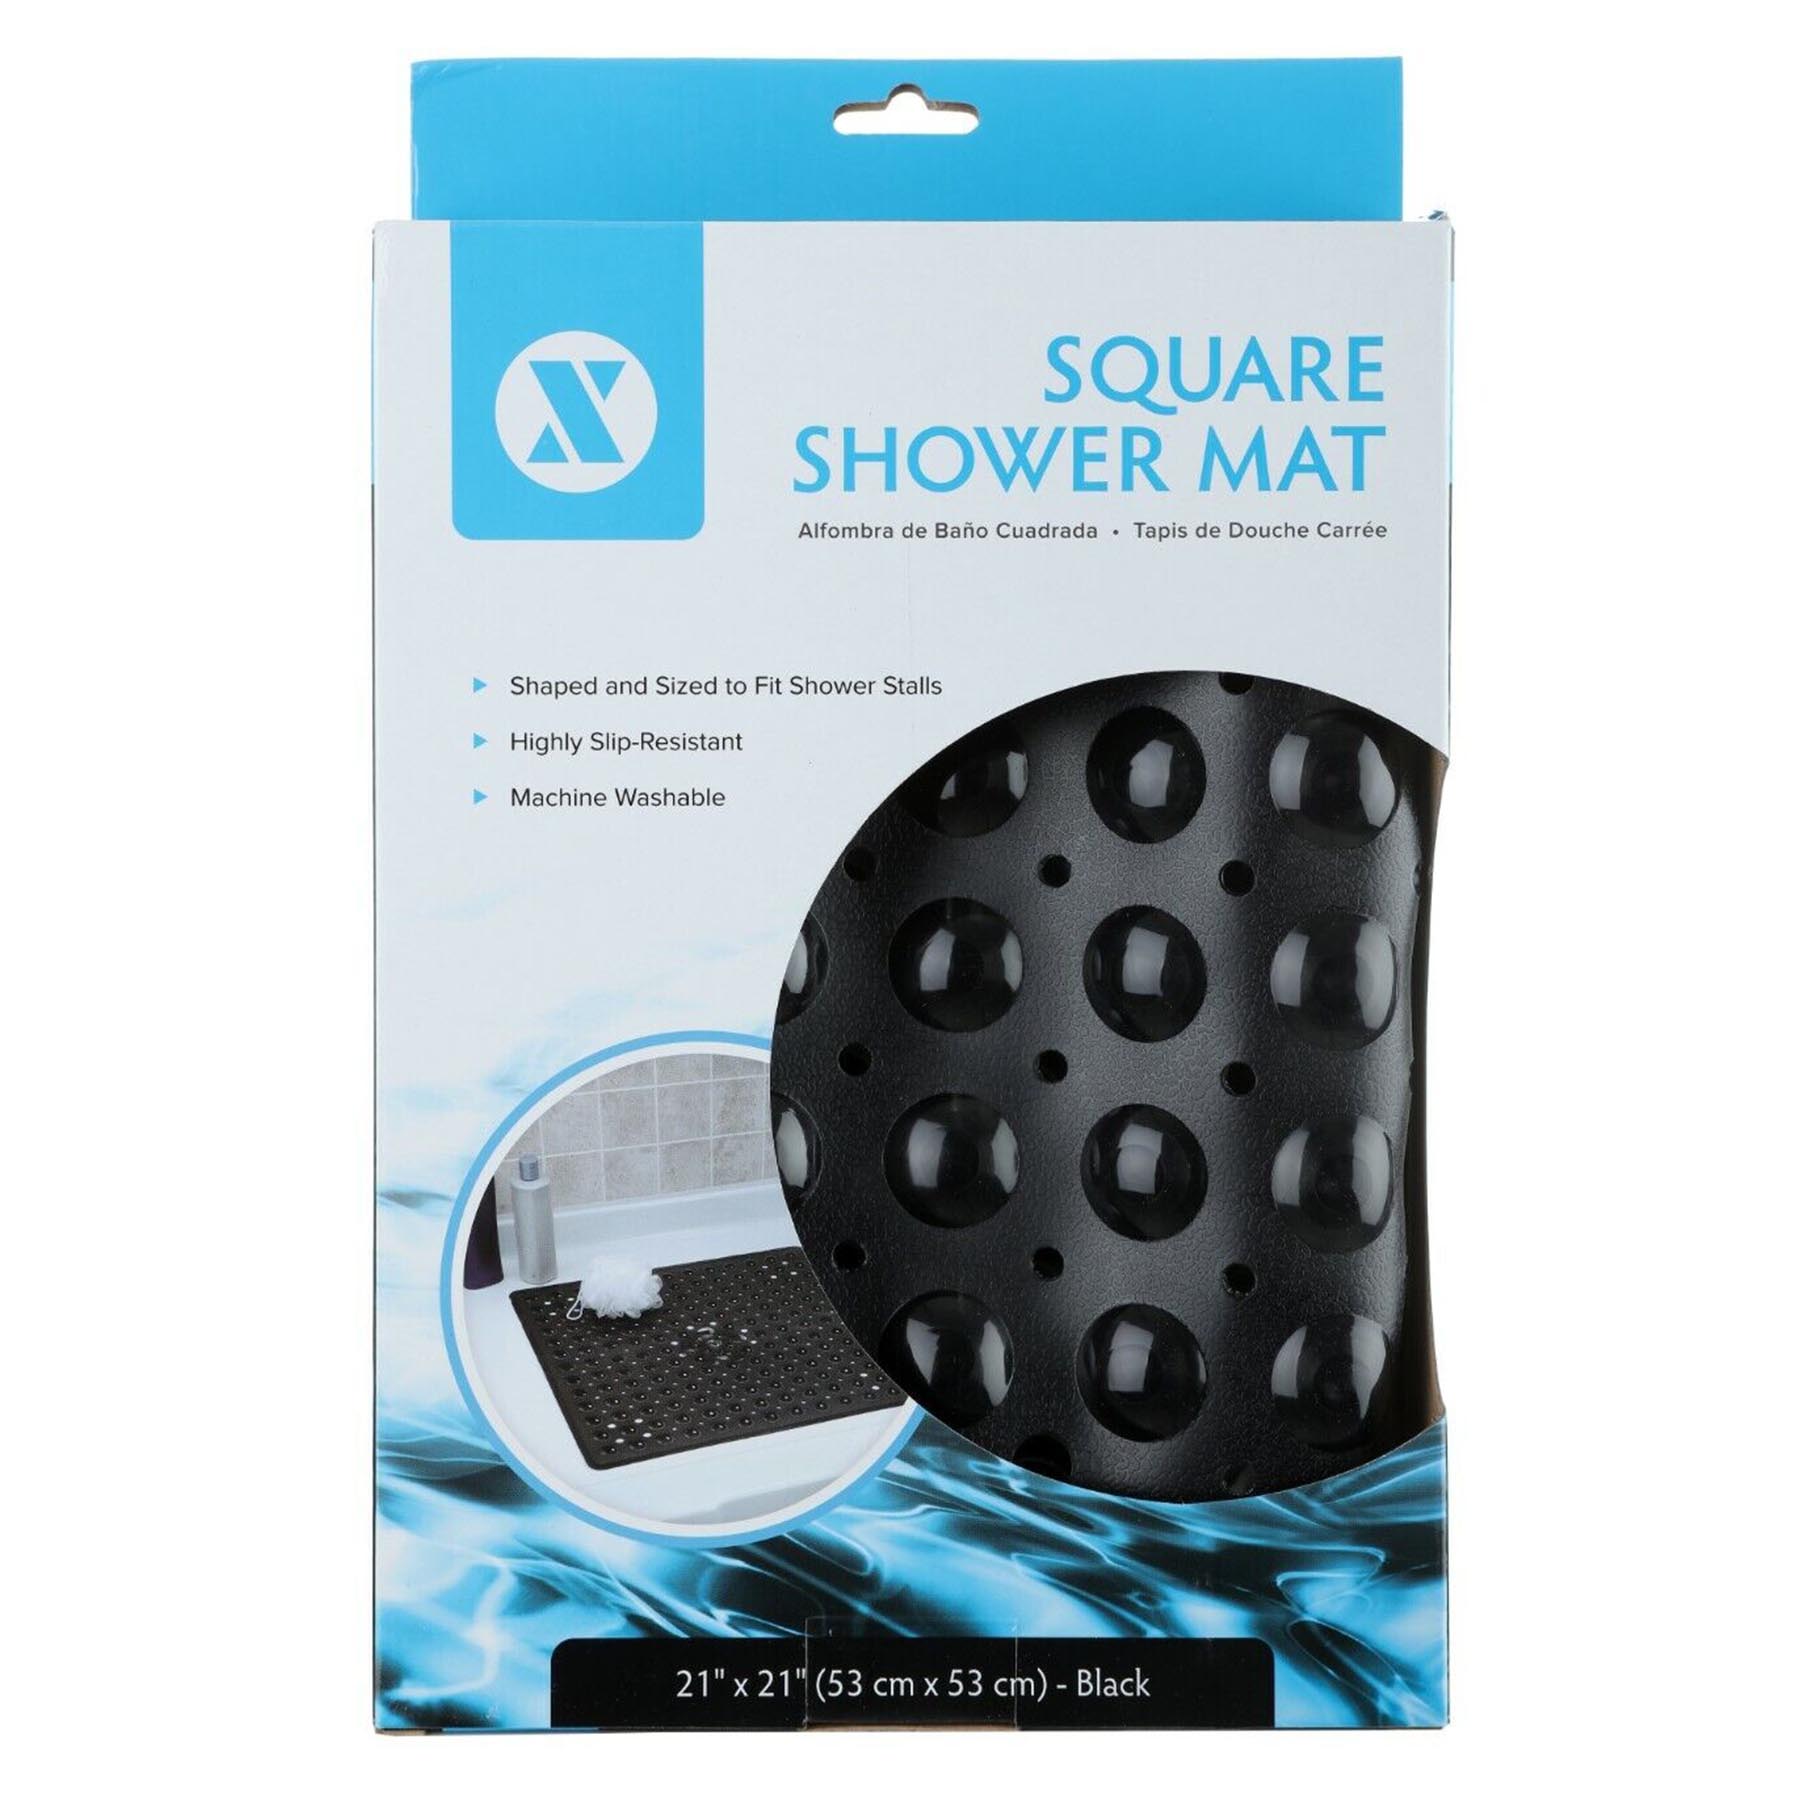 Square Shower Mat, Black Color